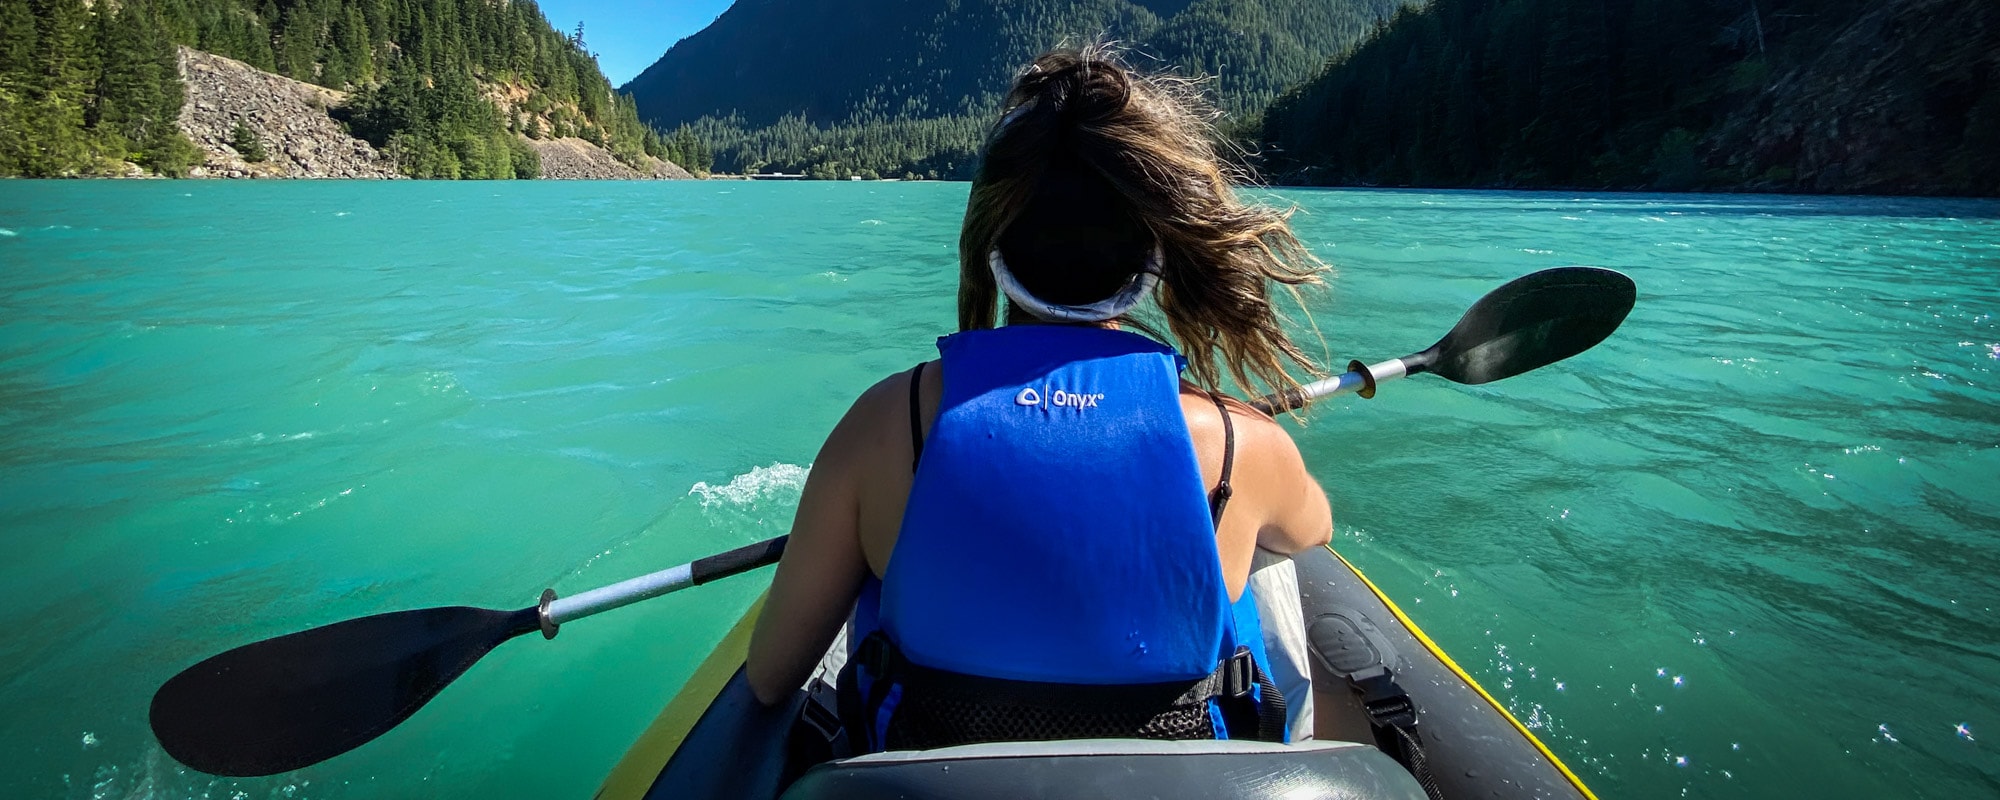 North Cascades National Park, Washington - Banner Diablo Lake Kayak